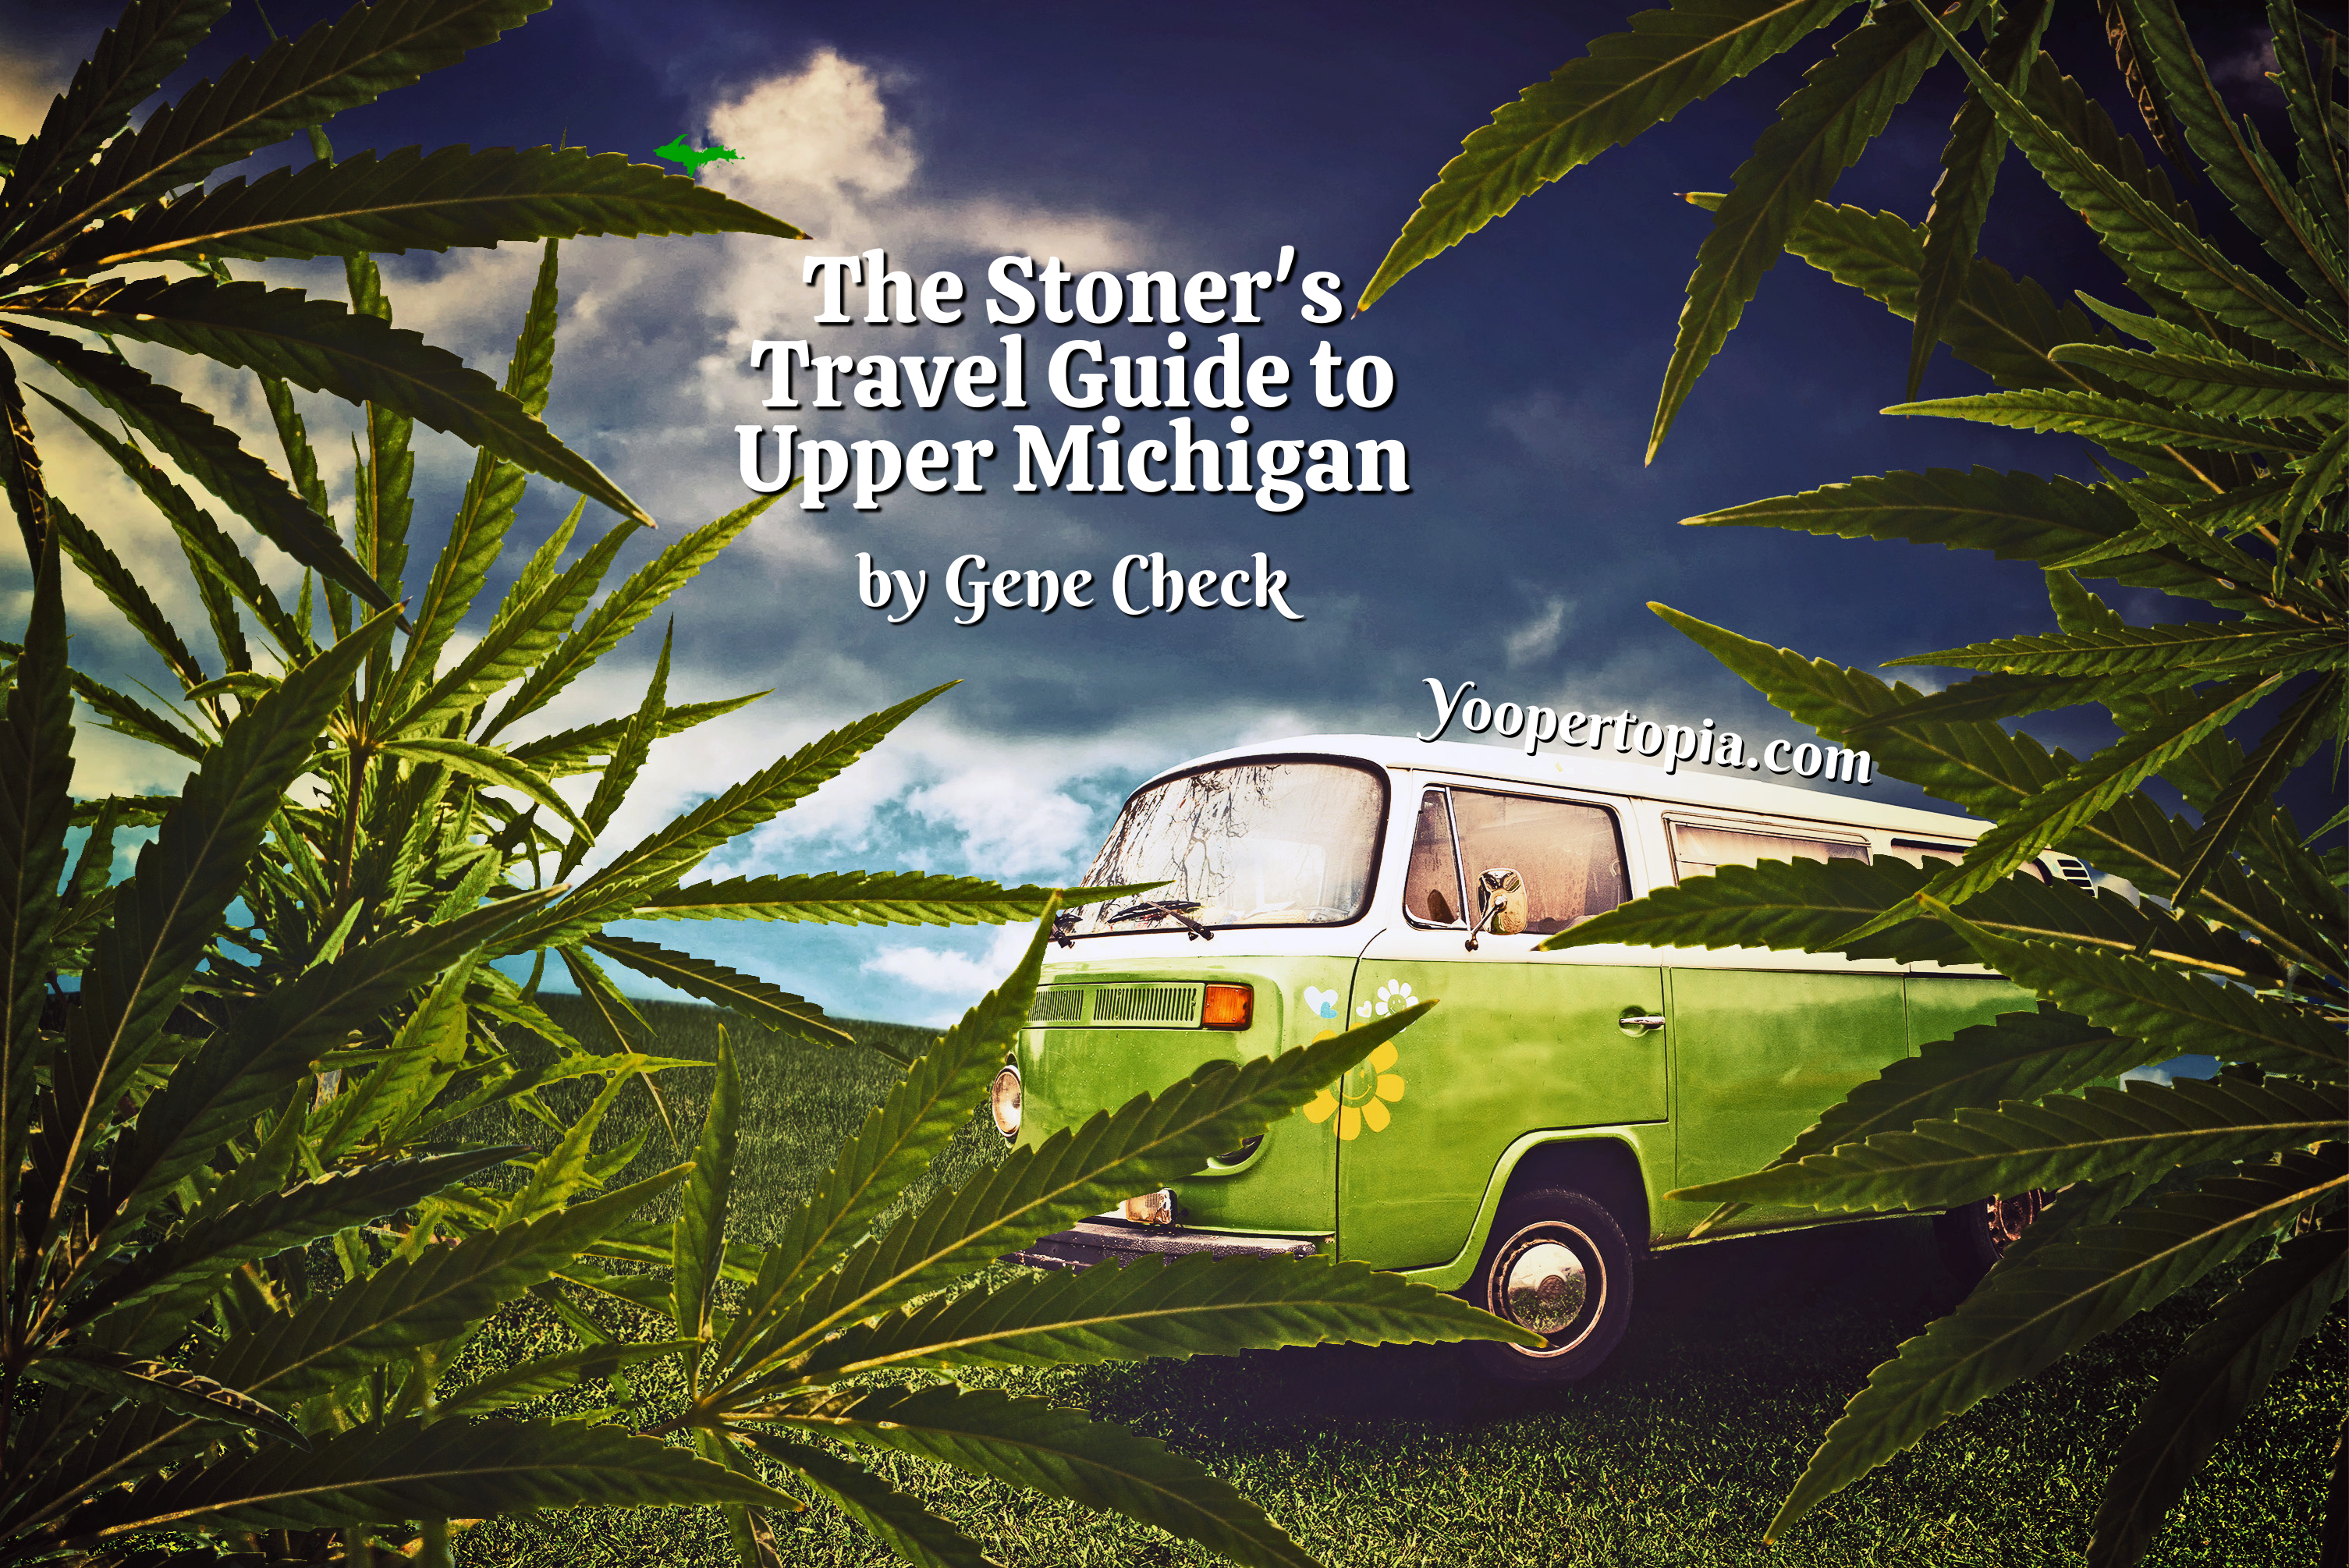 The Stoner's Travel Guide to Upper Michigan Promo Poster - Yoopertopia.com